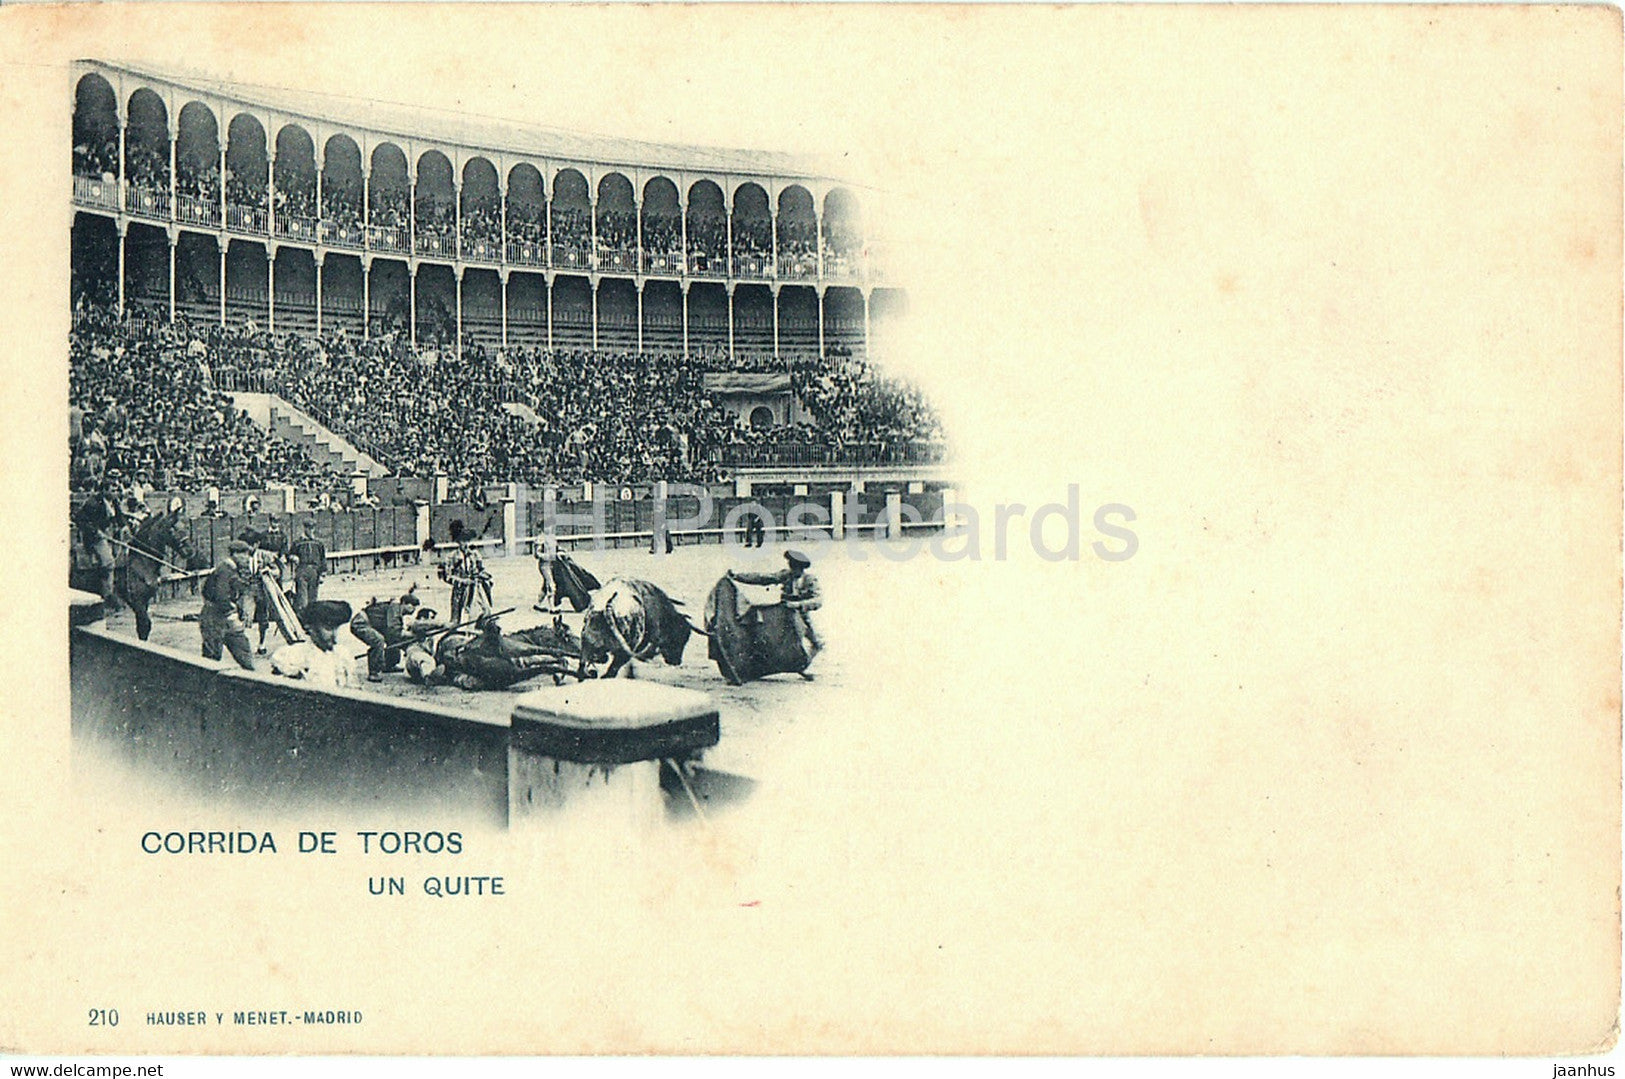 Corrida de Toros - Un Quite - 210 - old postcard - Spain - used - JH Postcards